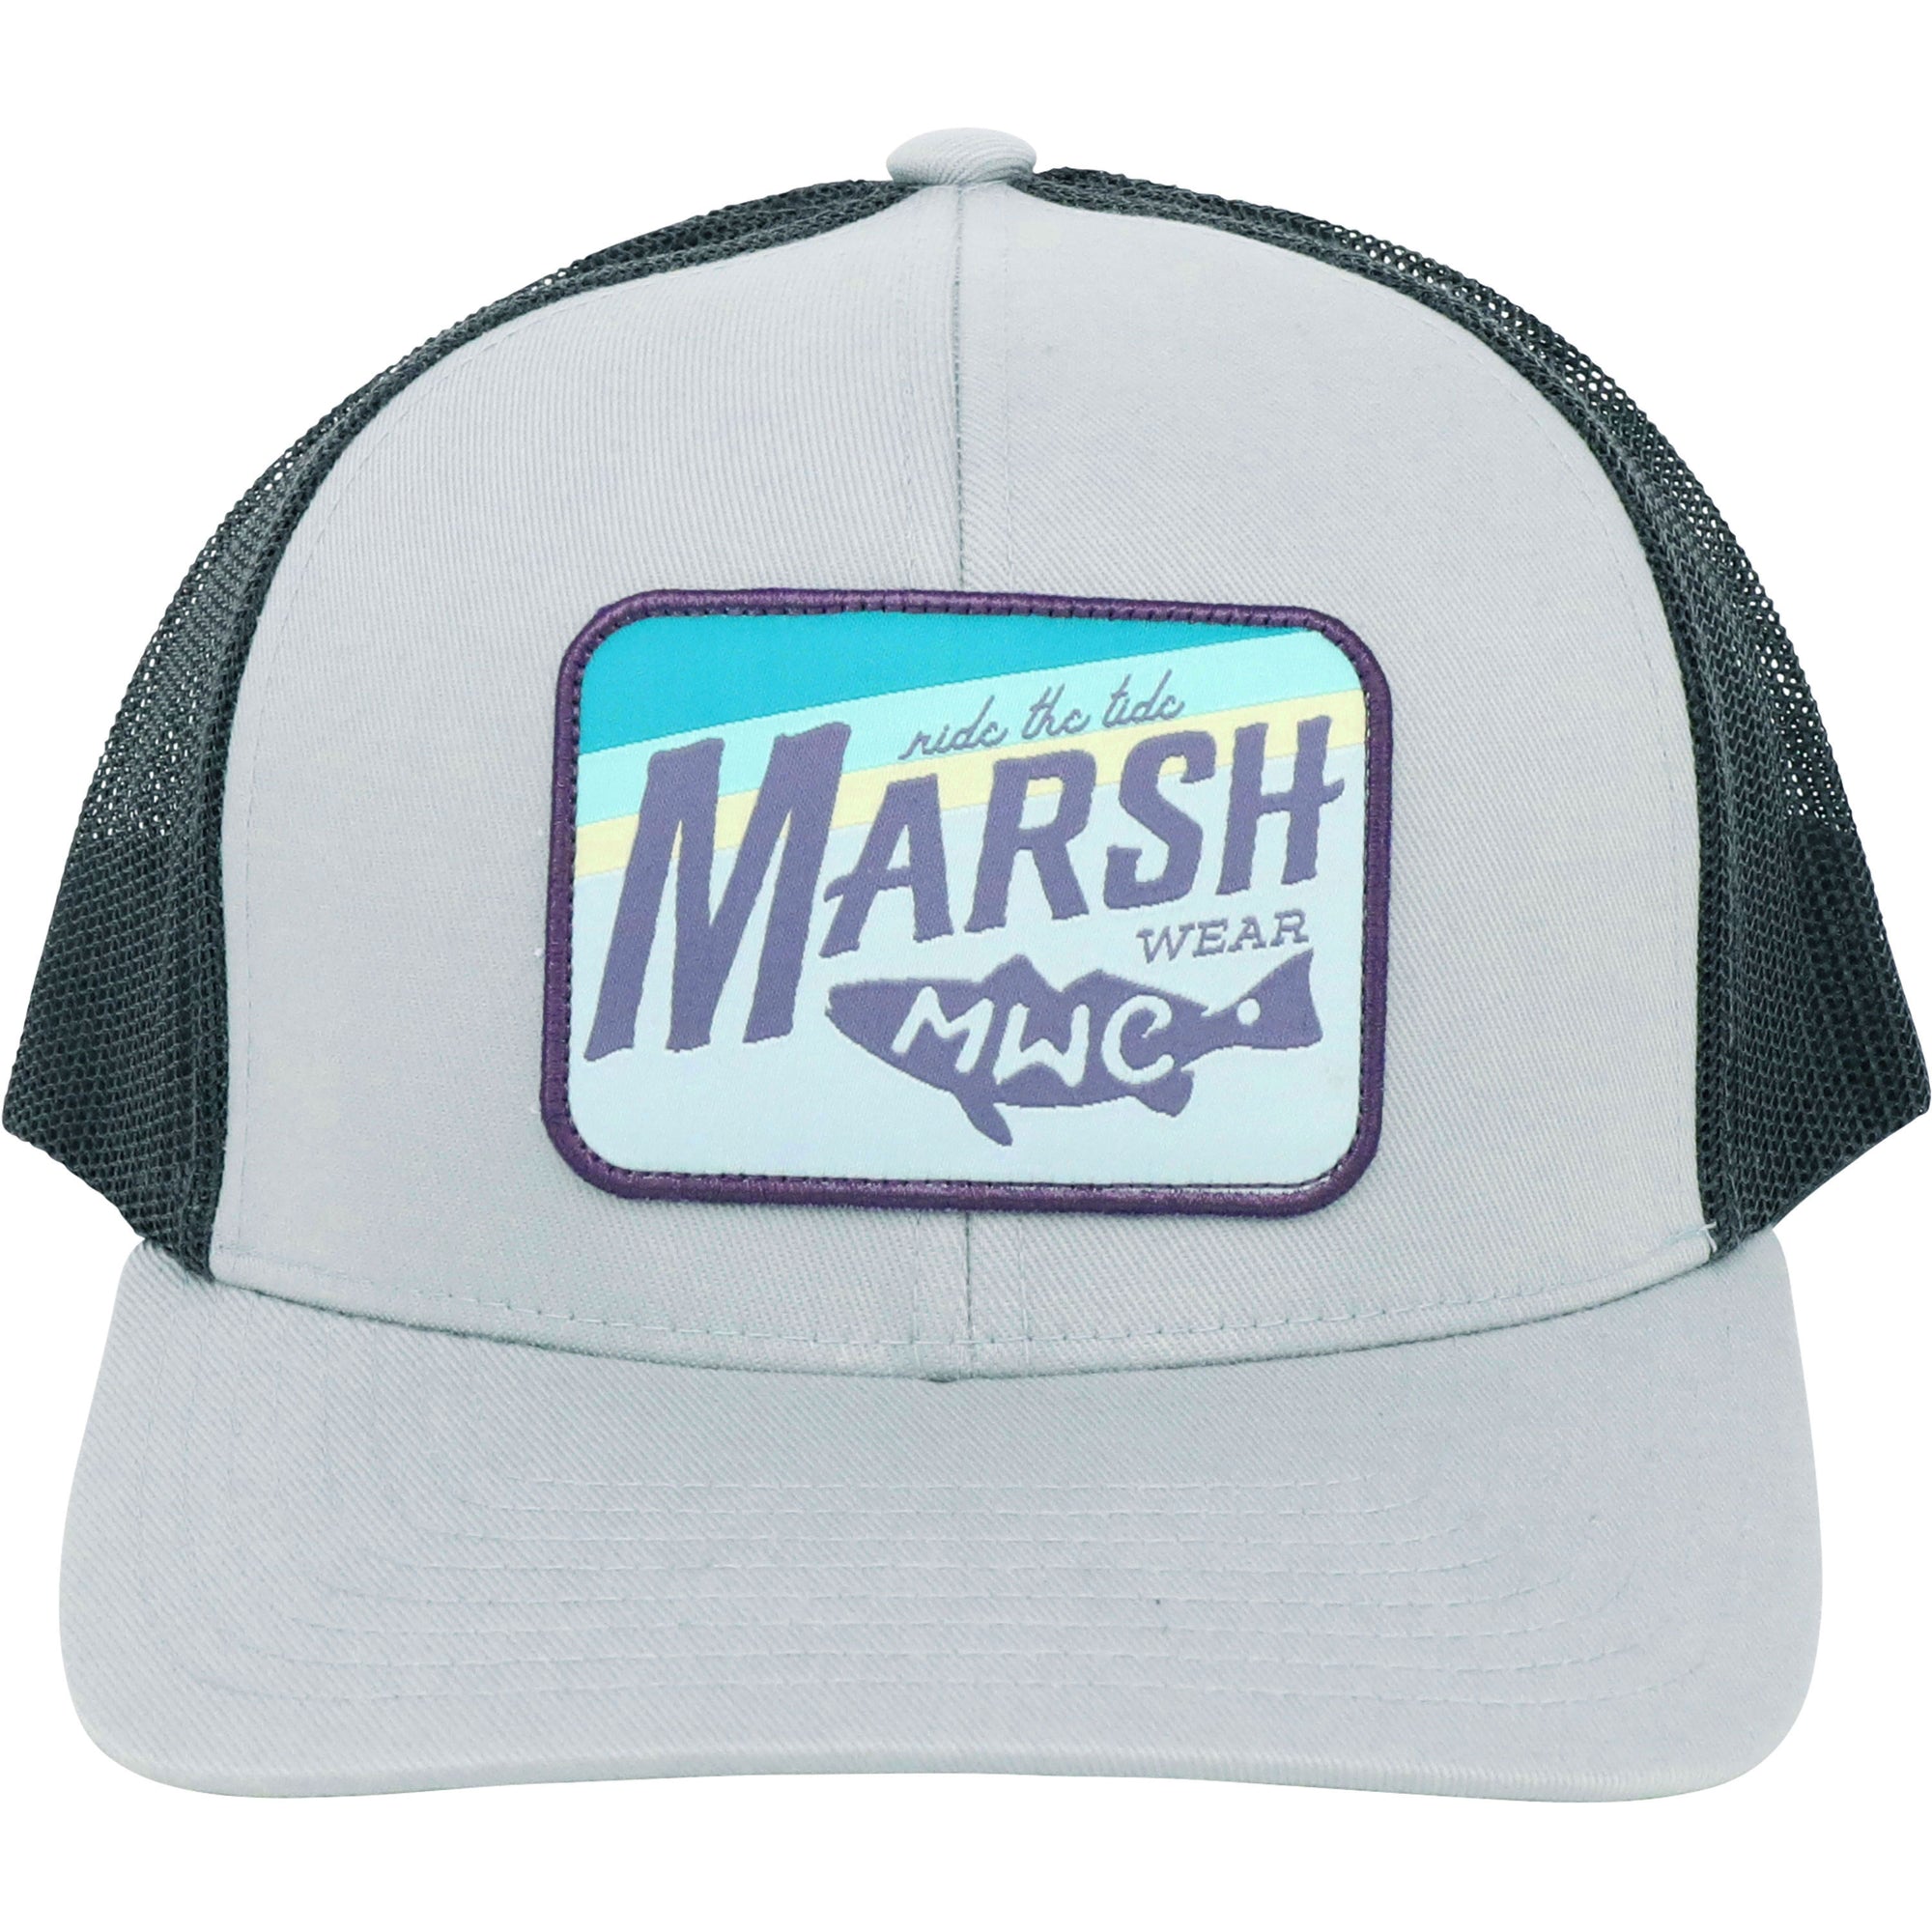 Marsh Wear Sunset Marsh Hat - Cloud